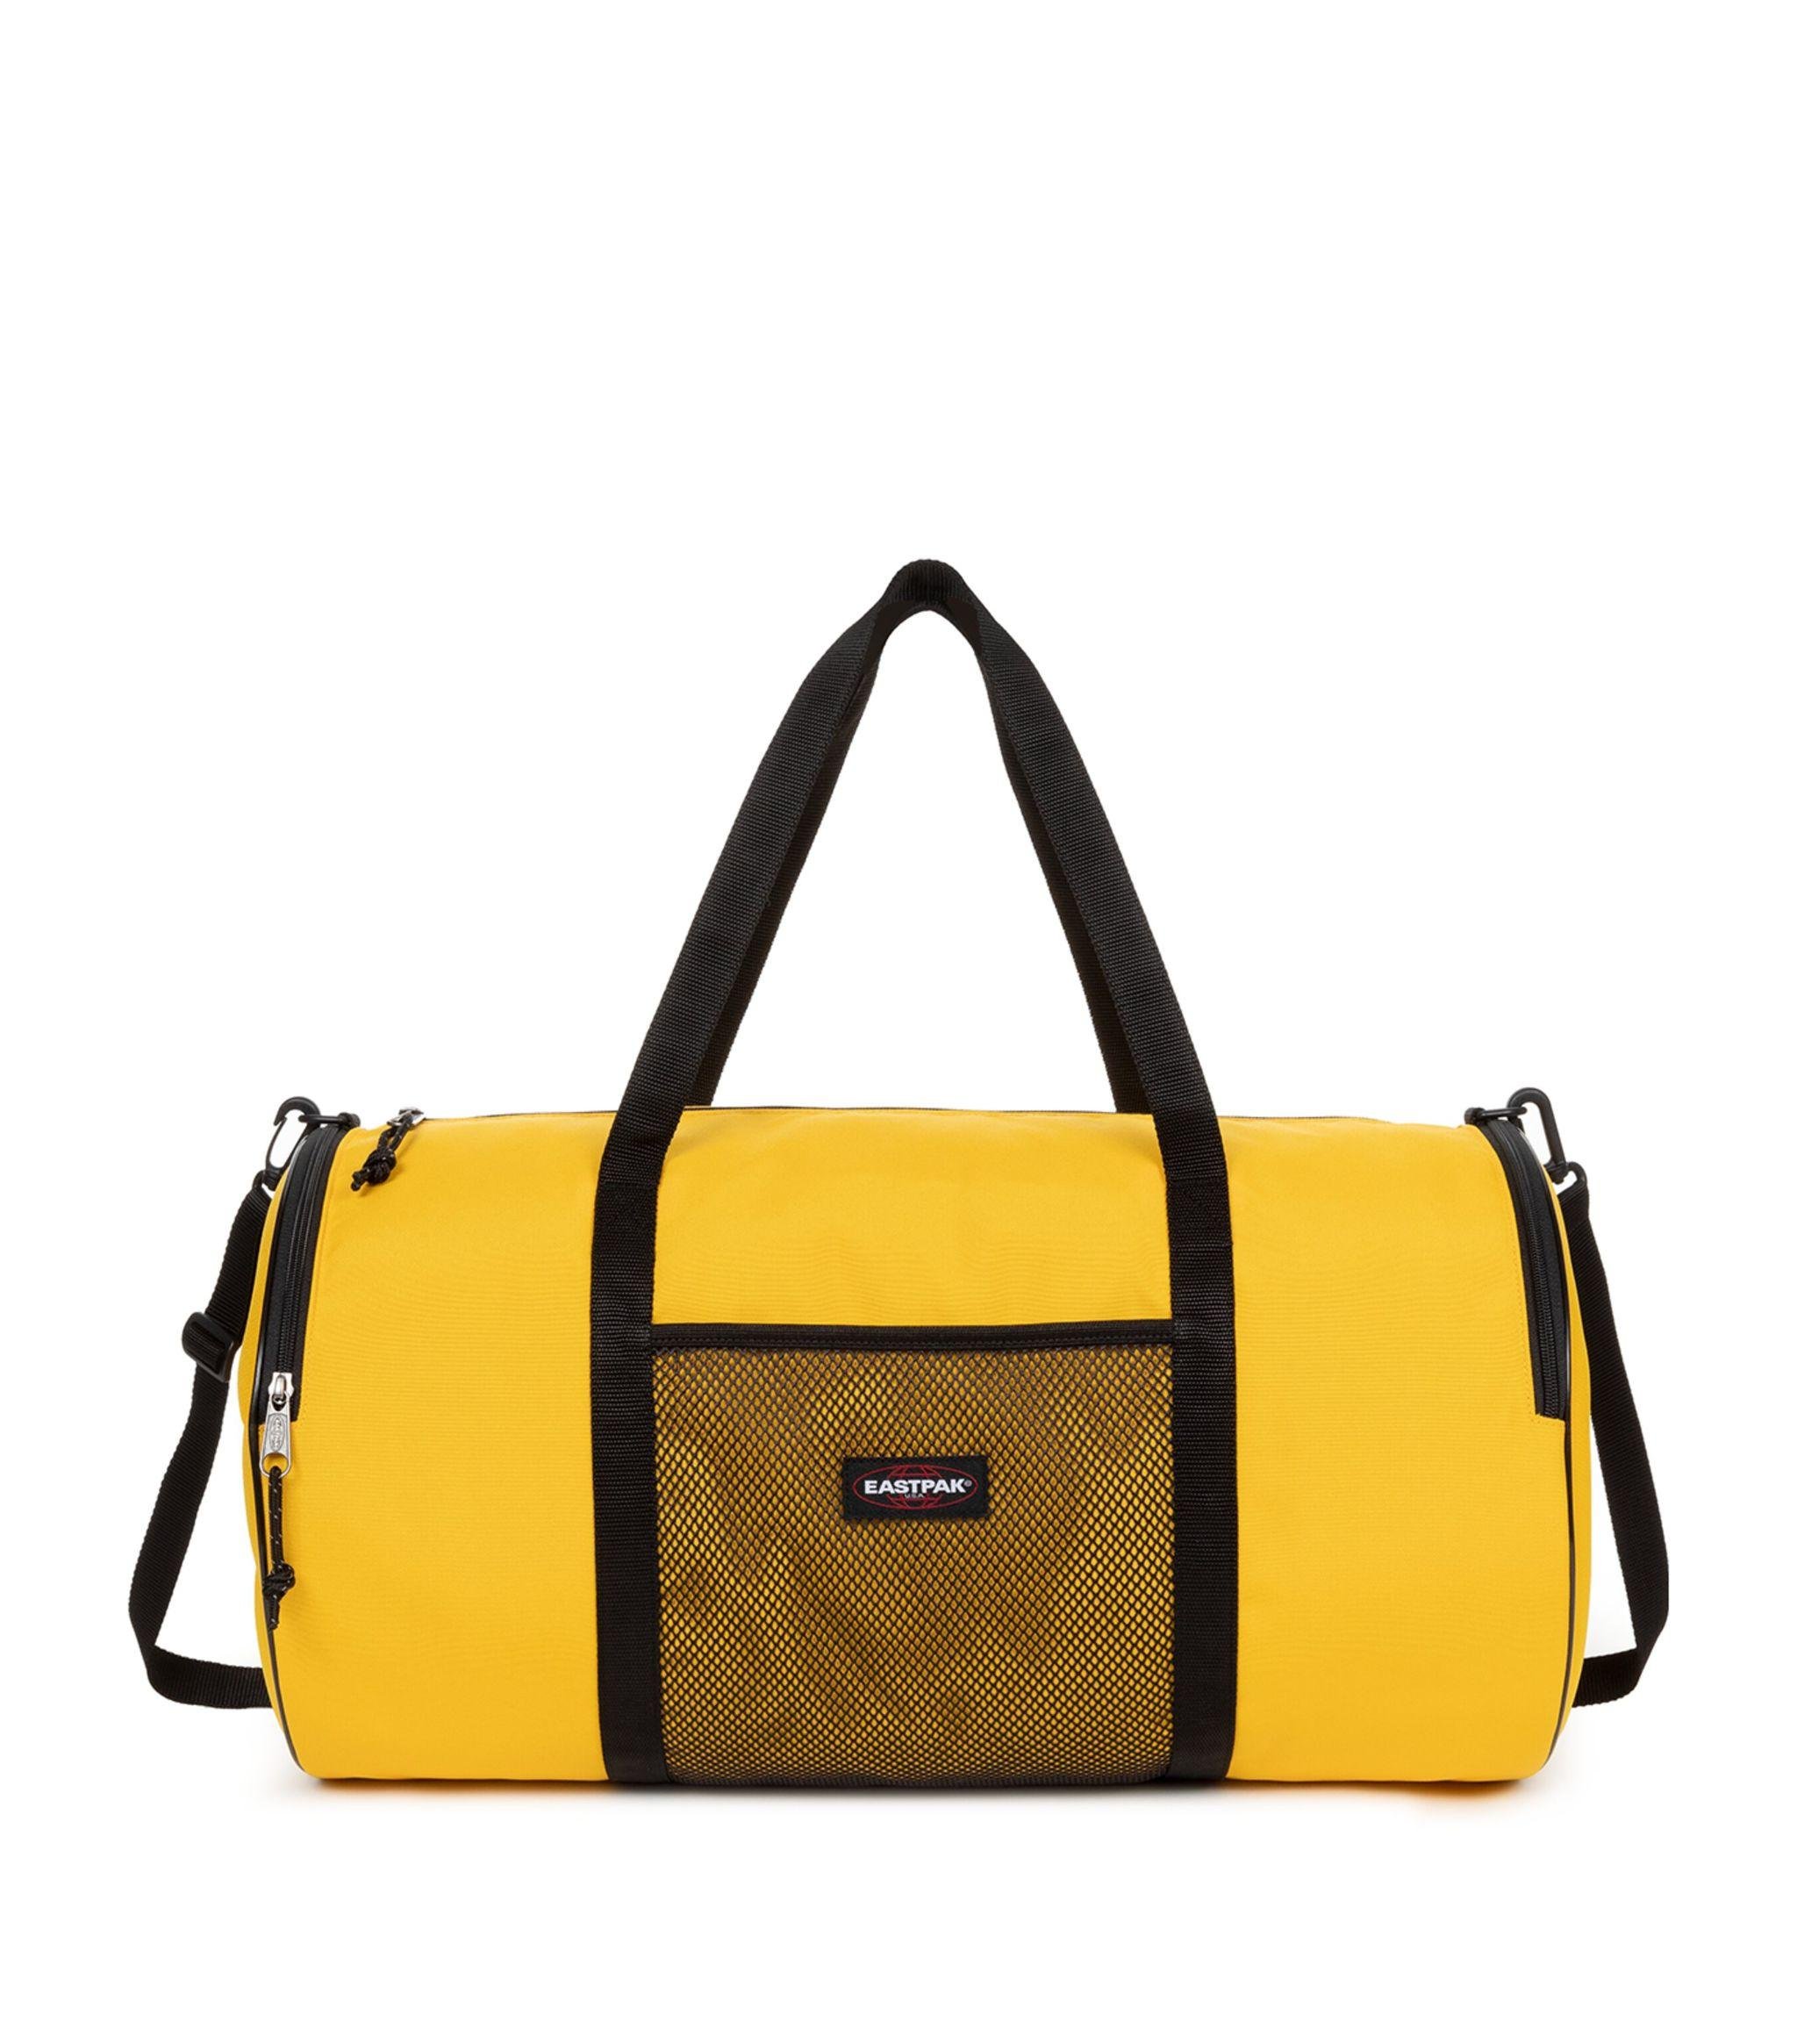 Eastpak X Telfar Large Duffle Bag in Yellow | Lyst